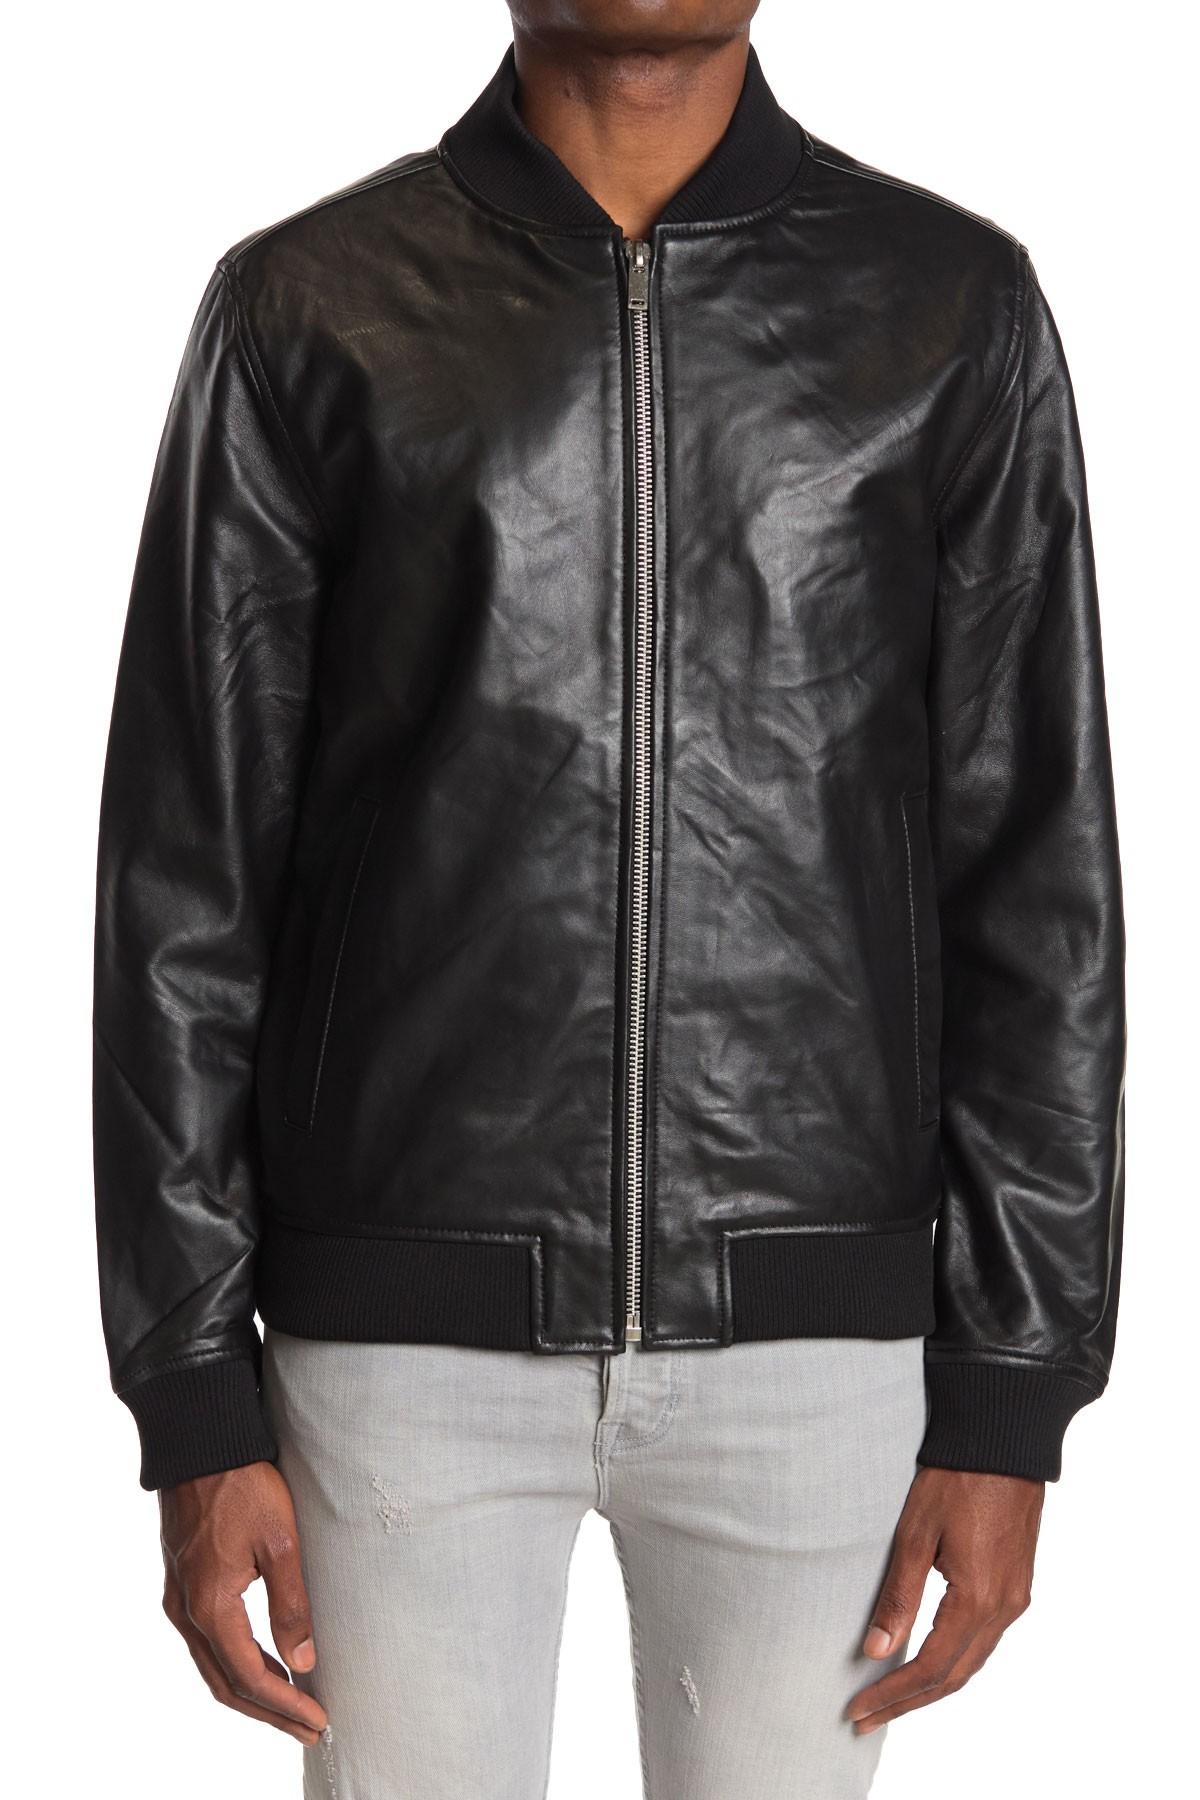 Slate & Stone Leather Bomber Jacket in Black for Men - Lyst